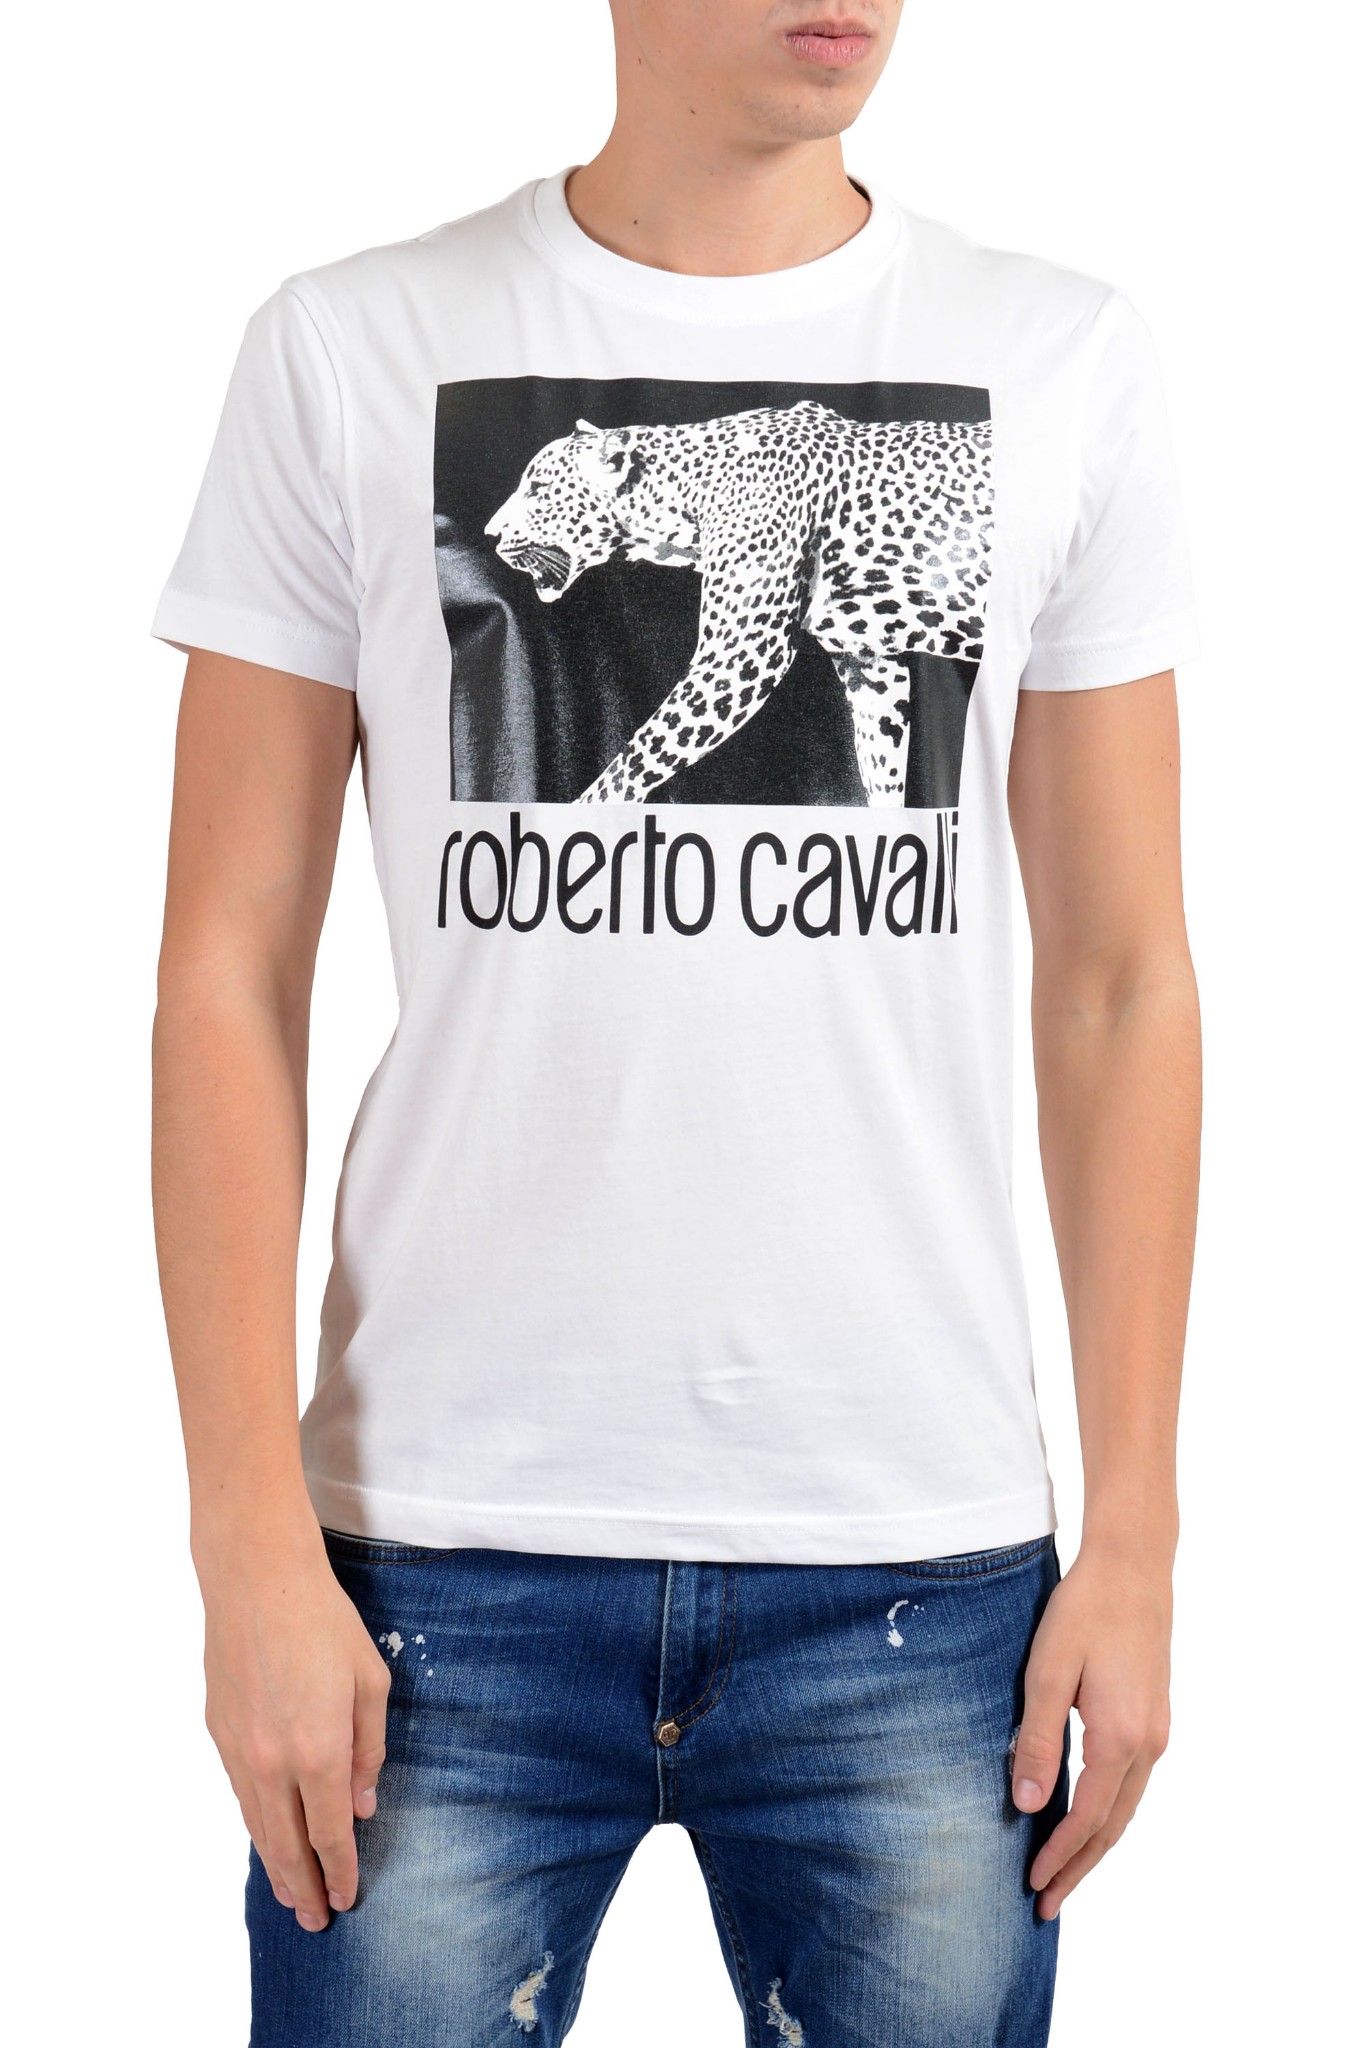 Roberto Cavalli Men's White Graphic Leopard Crewneck T-Shirt Size S M L XL  | eBay